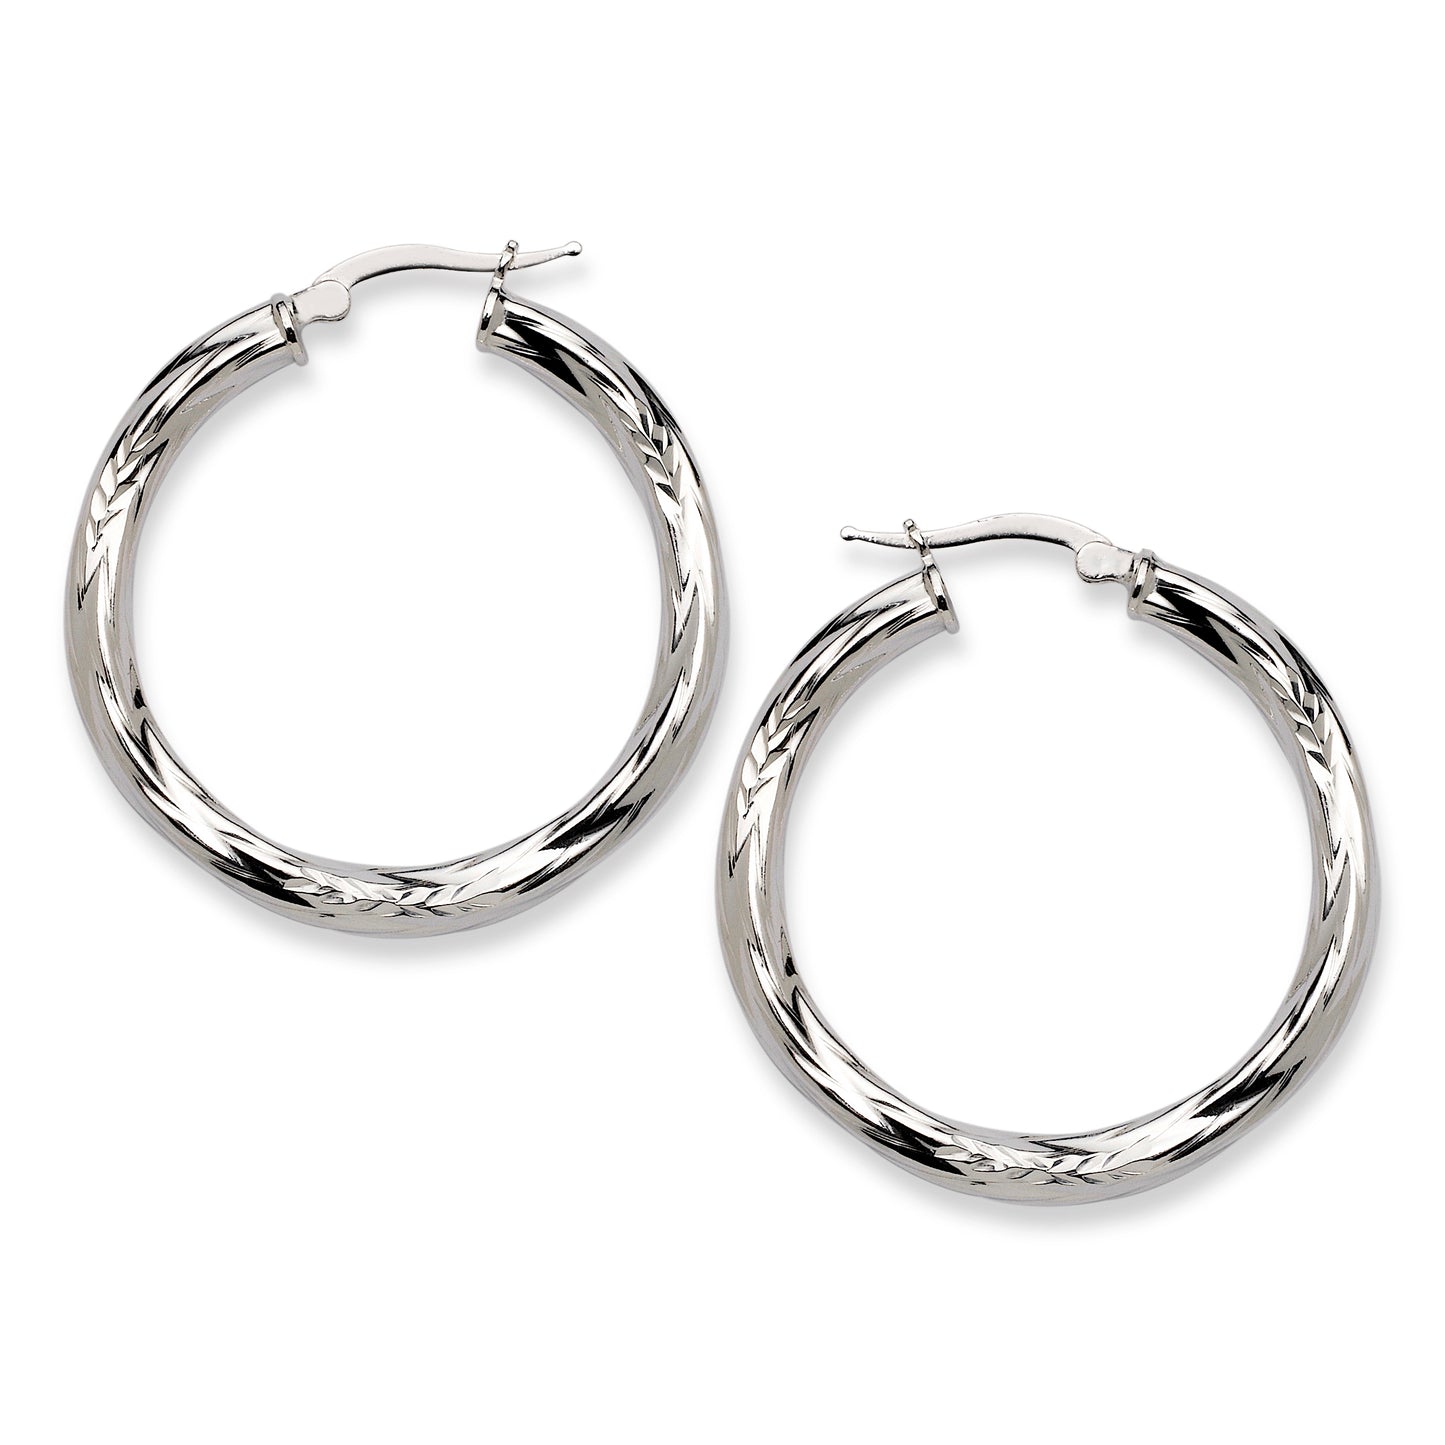 High Polish Diamond Cut Twisted Circle Hoops Earrings .925 Sterling Silver